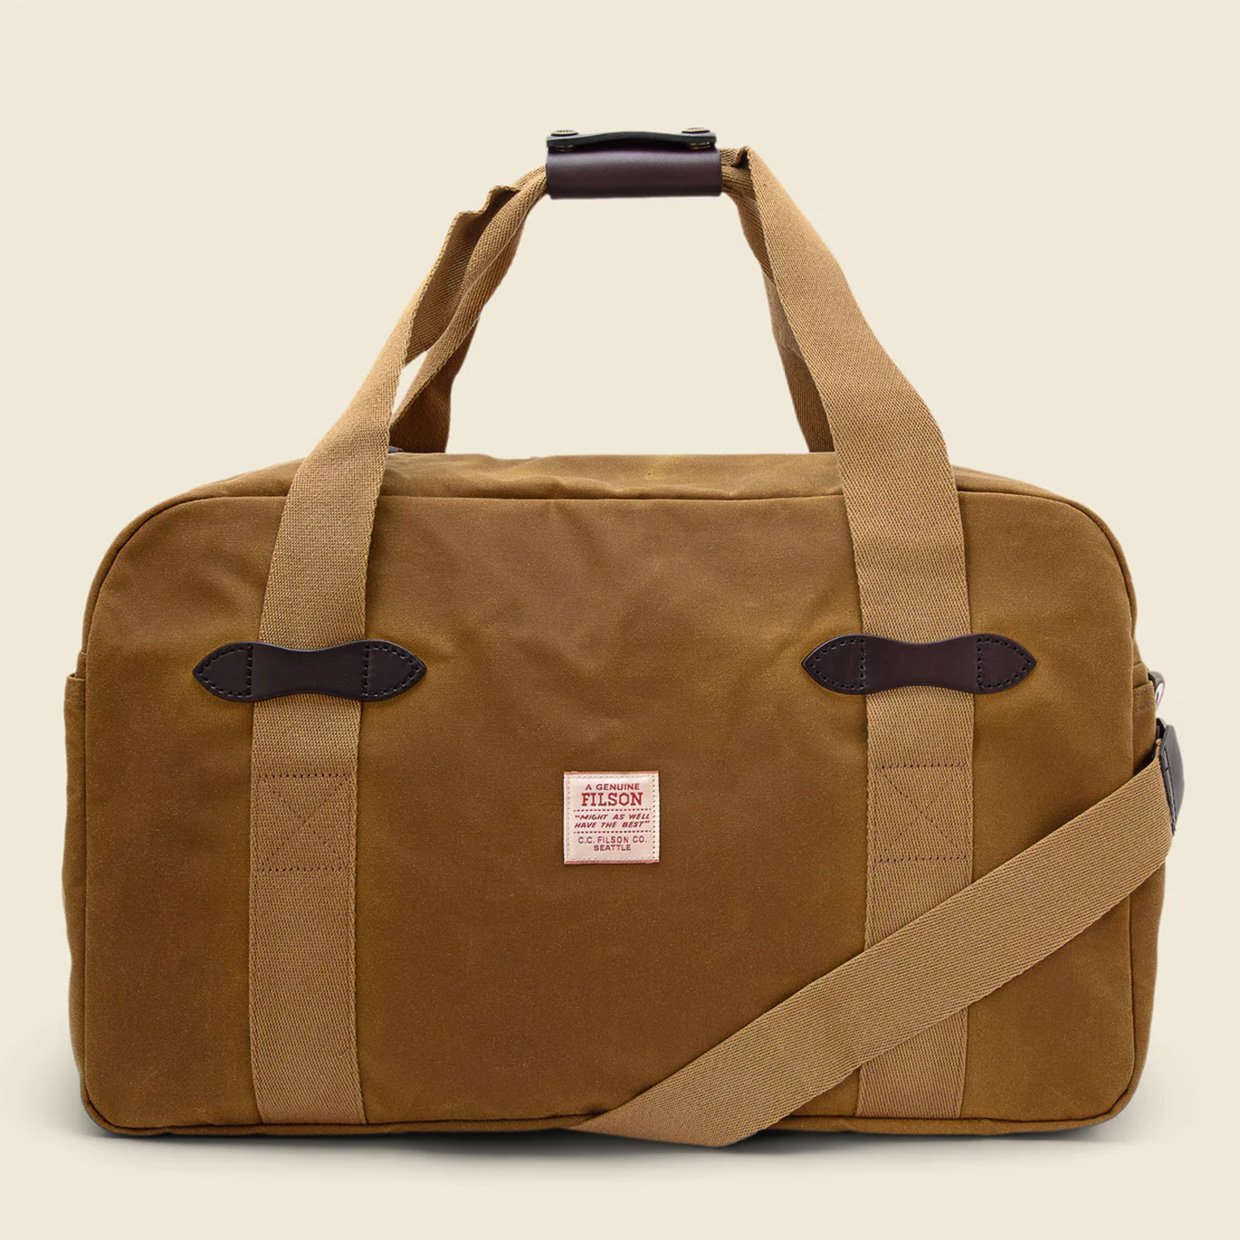 Filson Tin Cloth Medium Duffel Bag Makes a Great Travel Companion